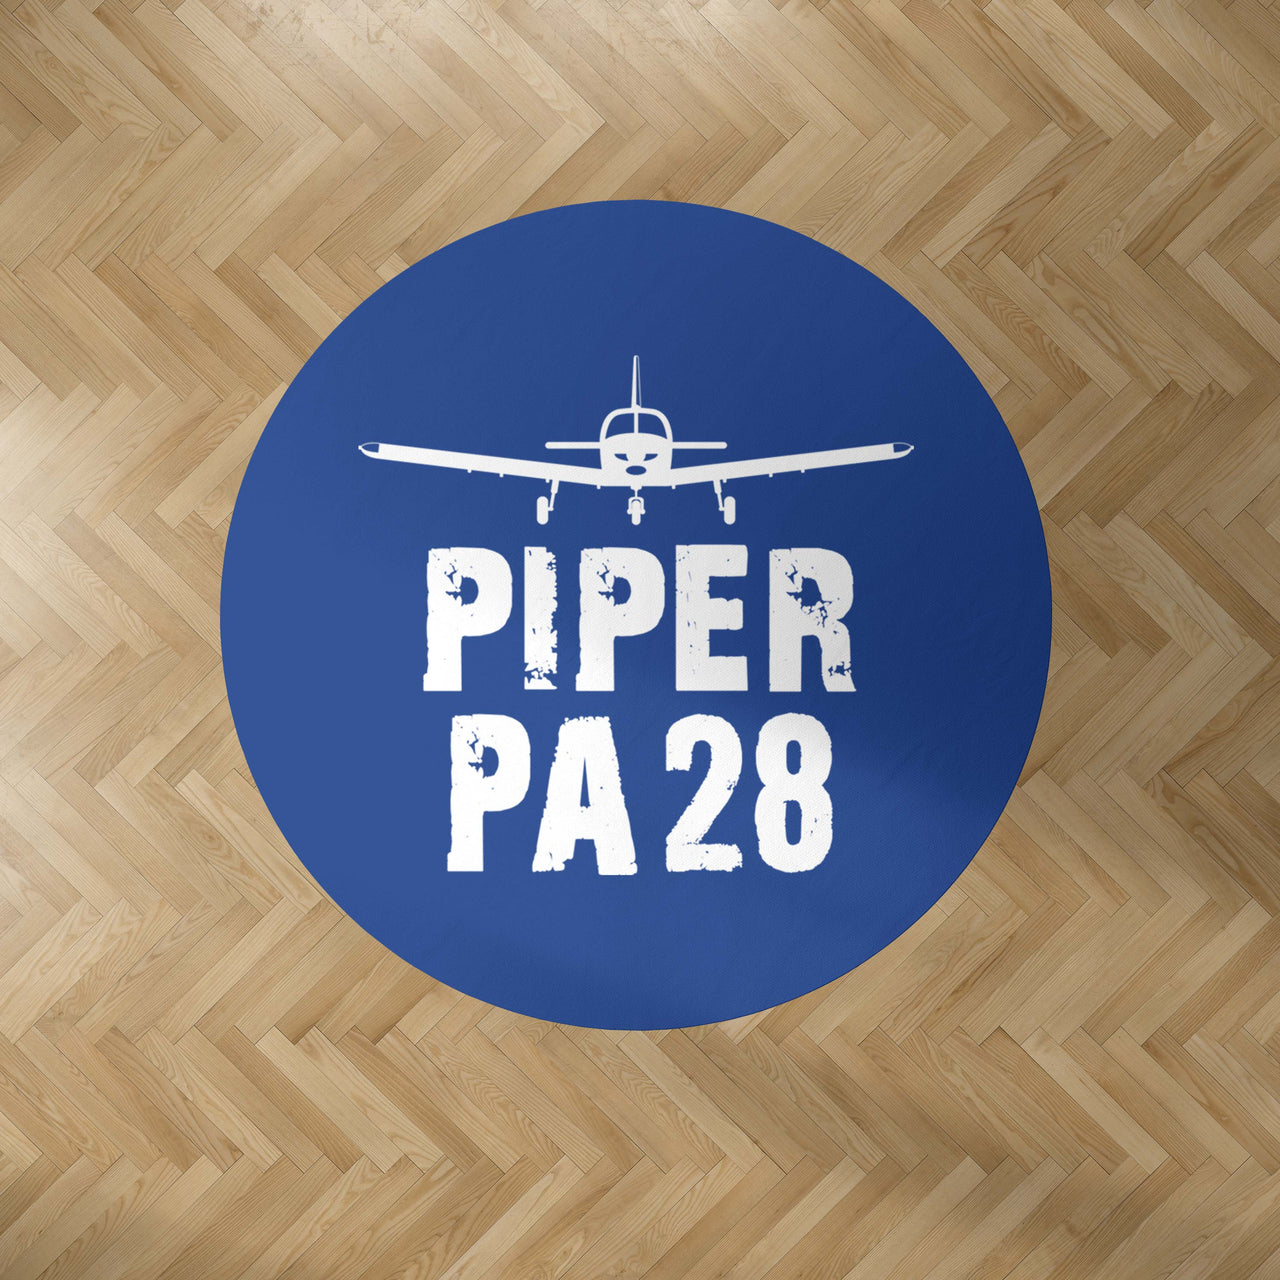 Piper PA28 & Plane Designed Carpet & Floor Mats (Round)